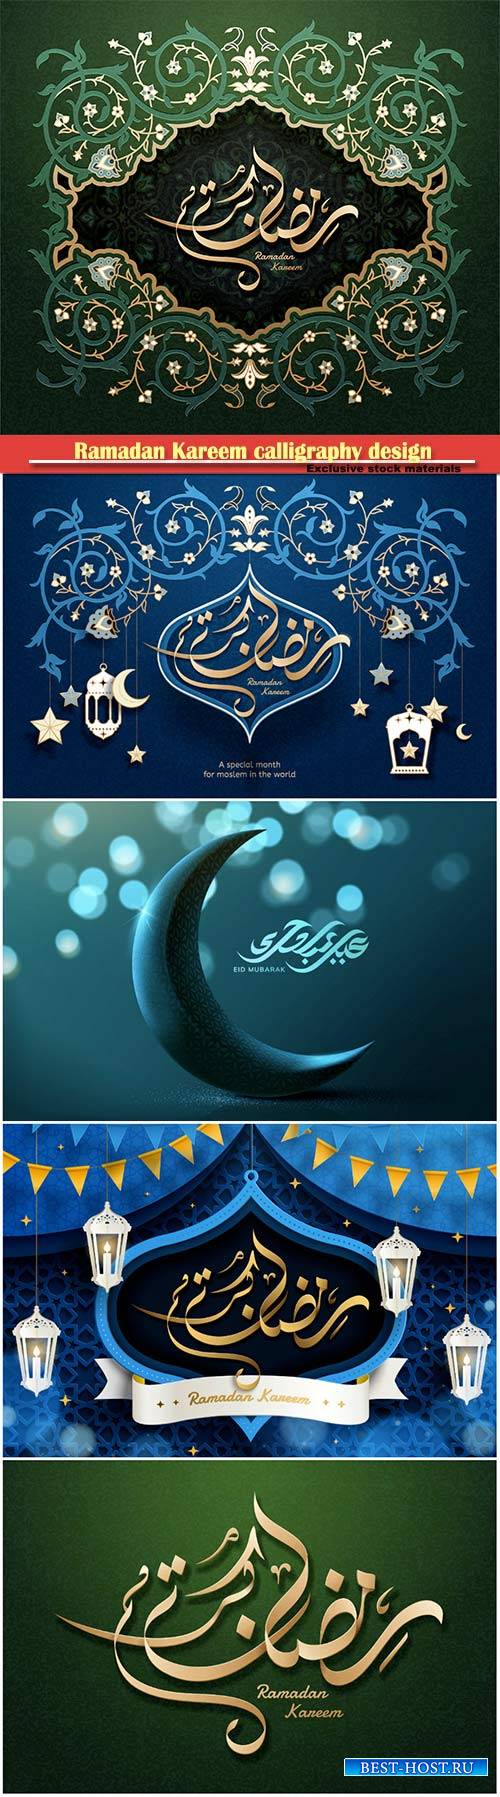 Ramadan Kareem calligraphy design, Eid mubarak  vector illustration